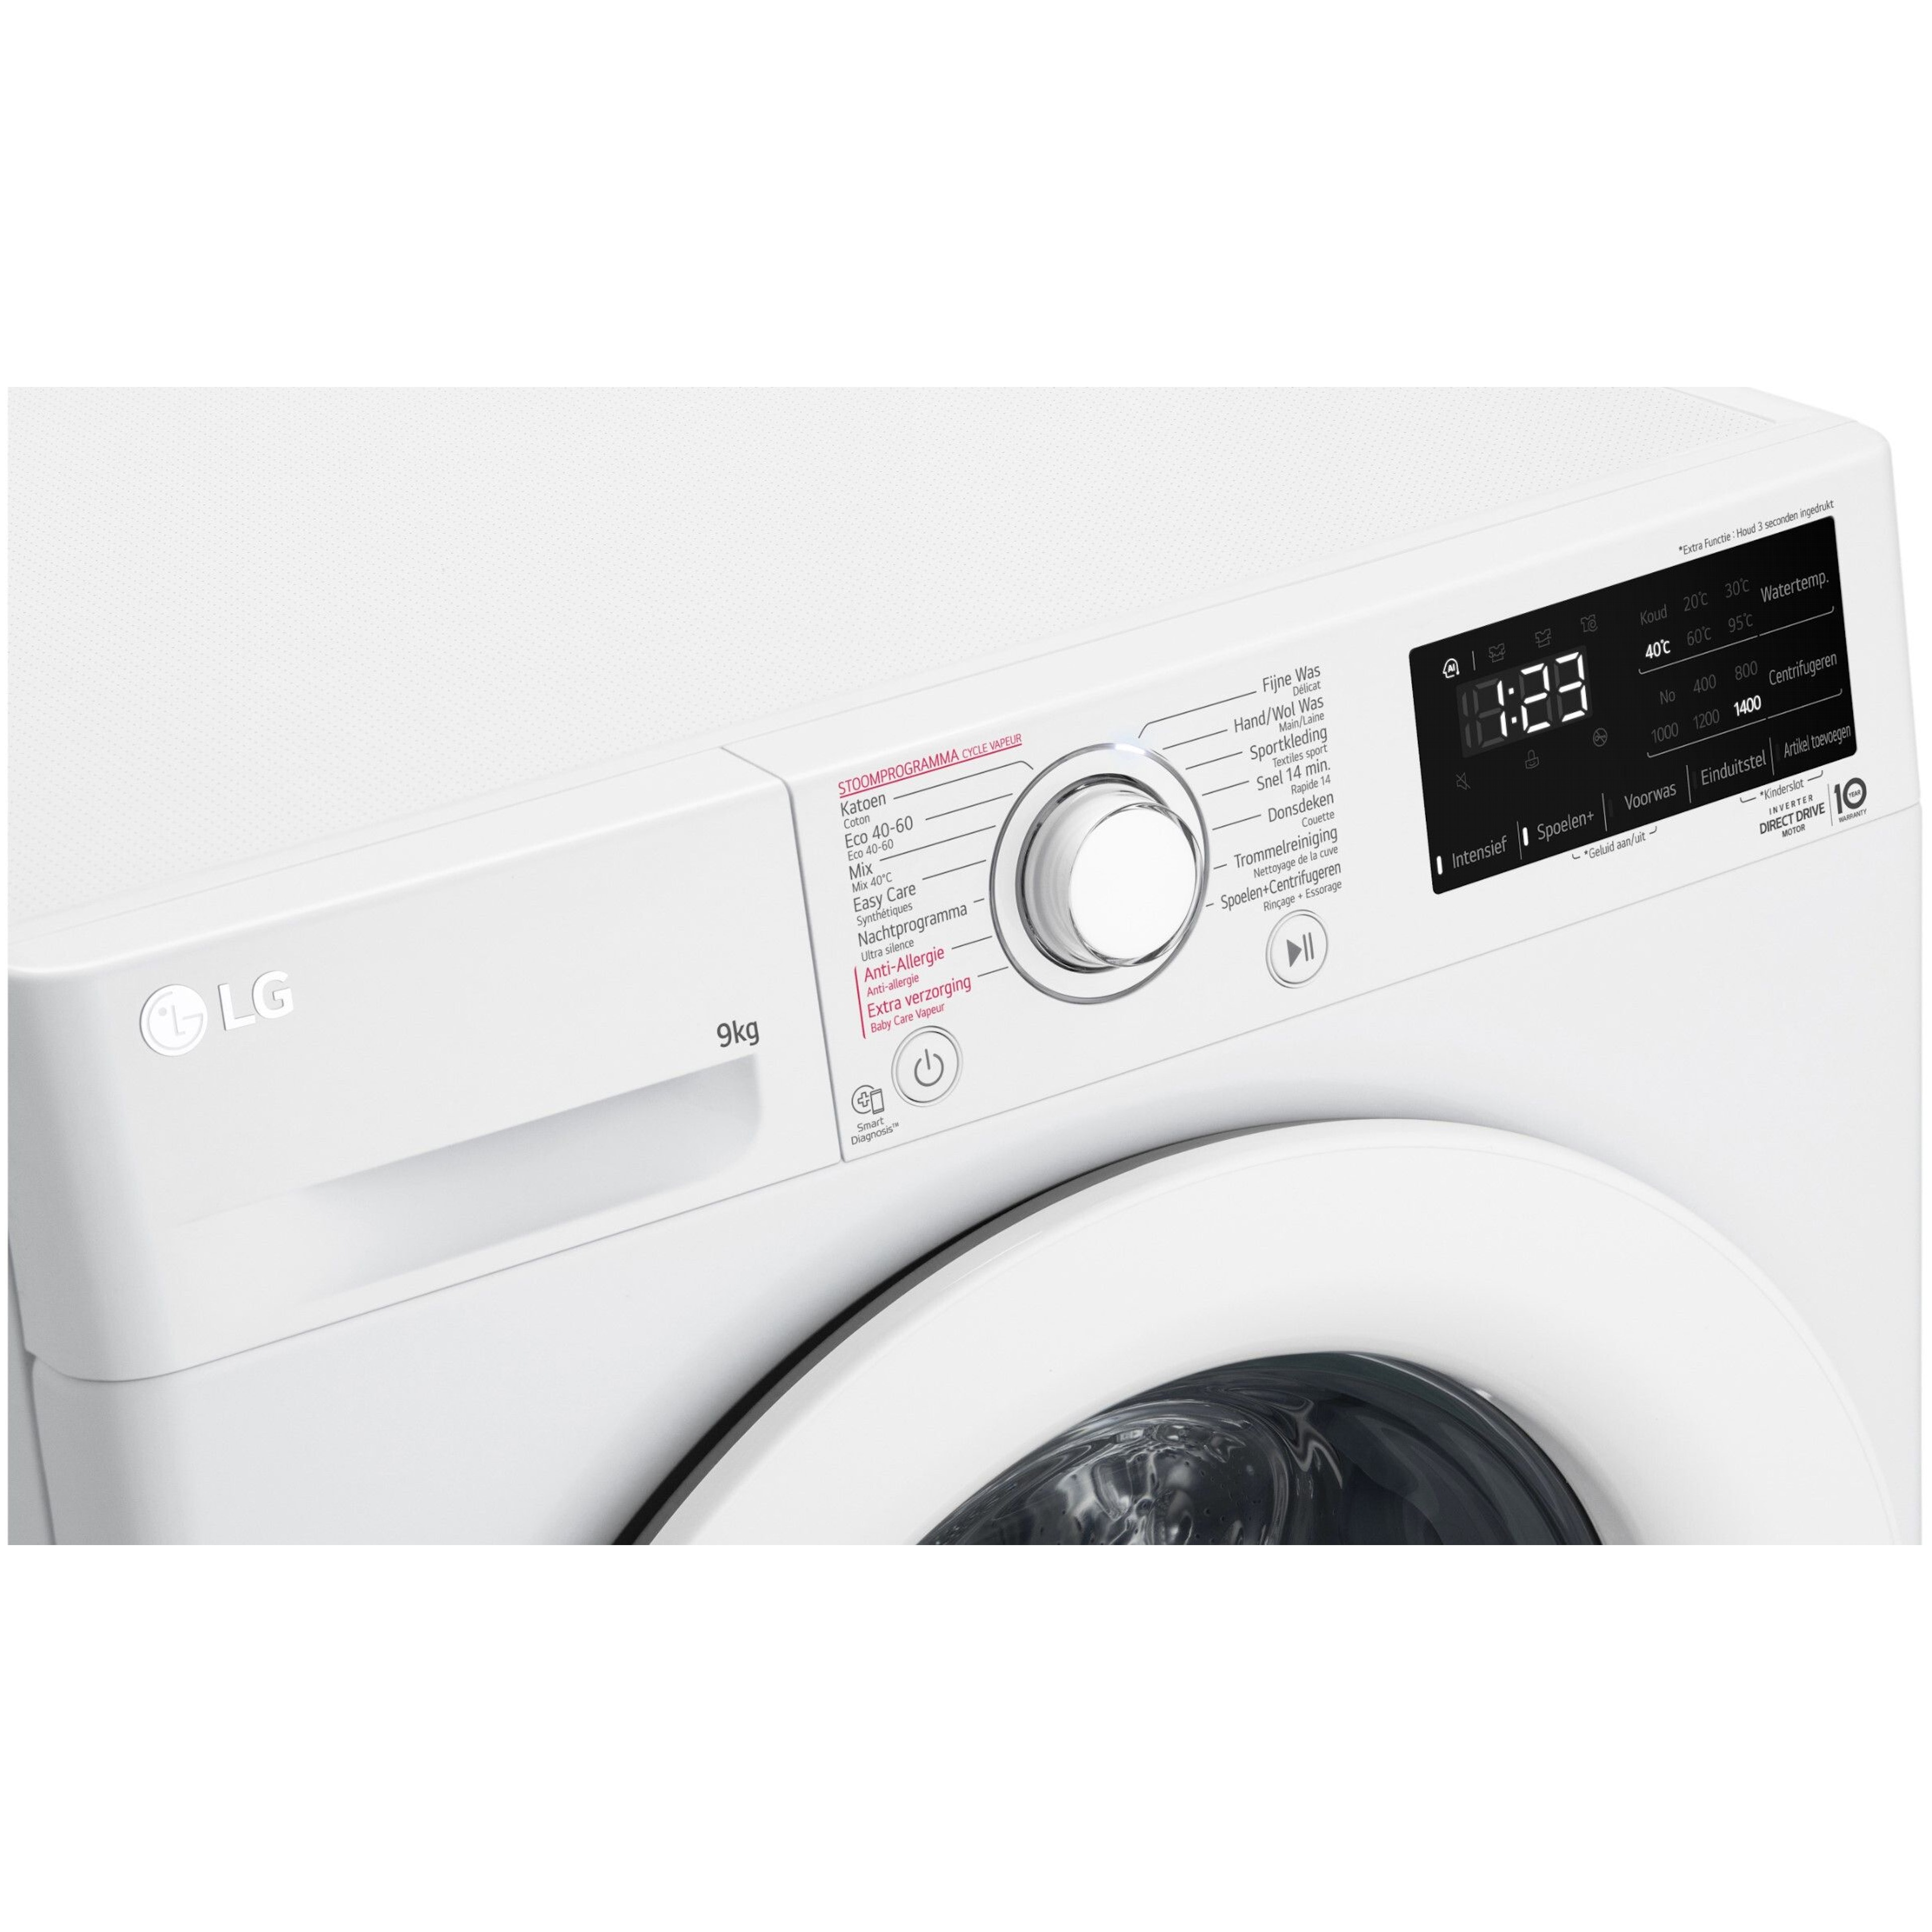 LG wasmachine F4WV309S3 afbeelding 3